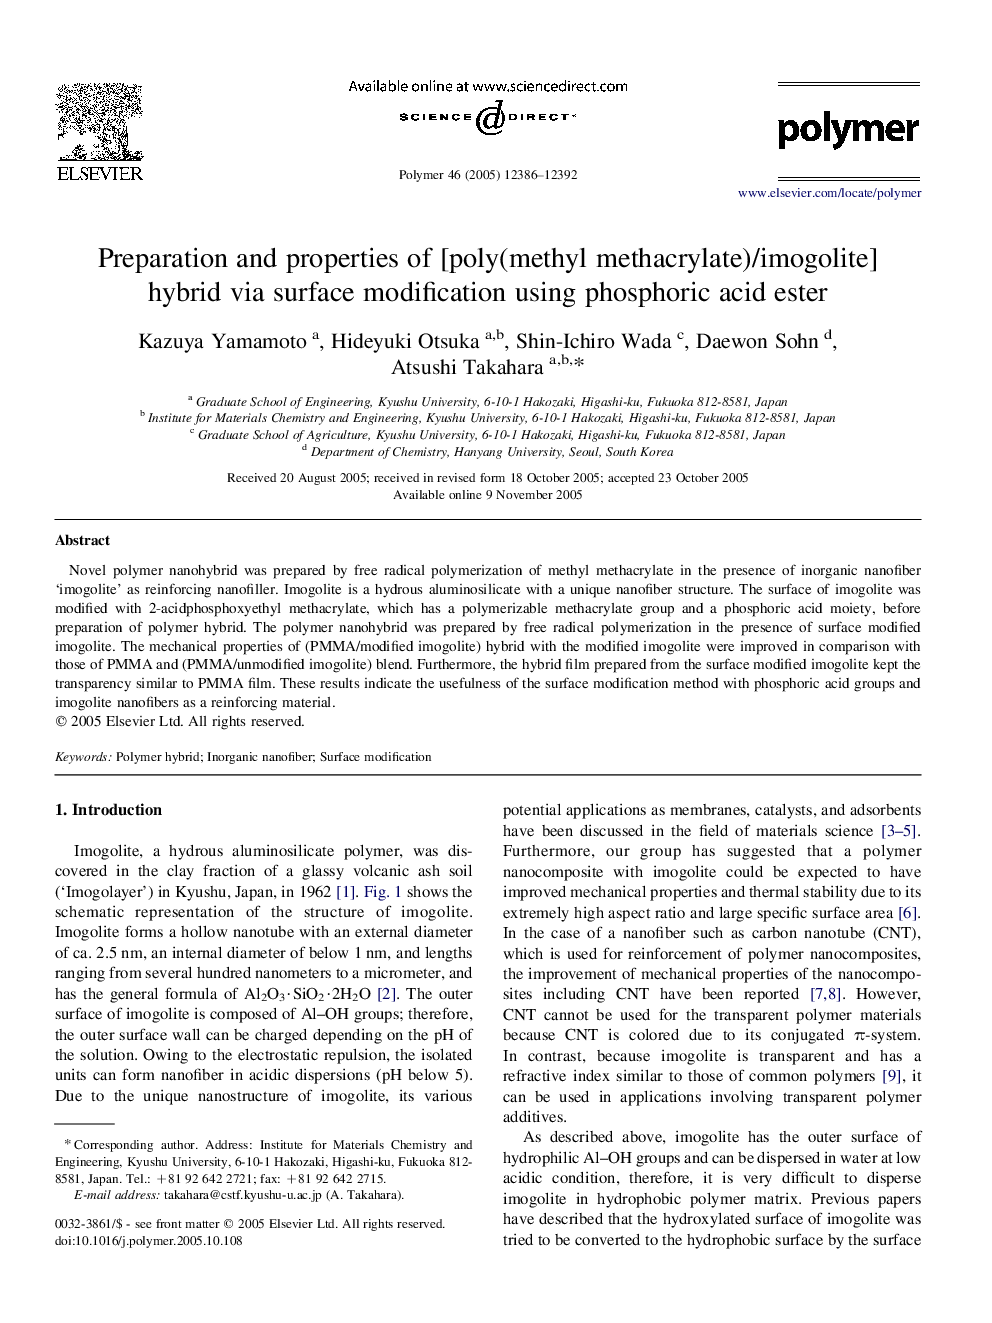 Preparation and properties of [poly(methyl methacrylate)/imogolite] hybrid via surface modification using phosphoric acid ester